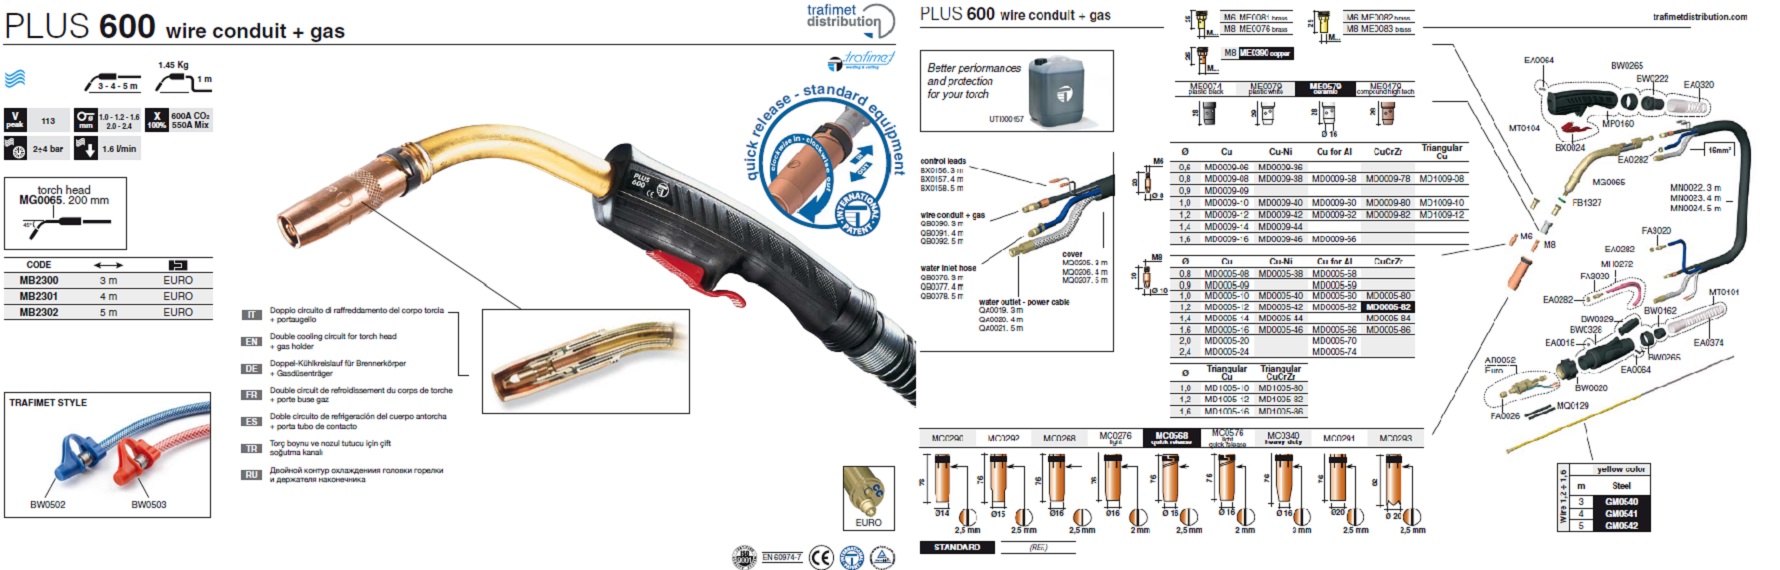 PLUS 600 wire conduit